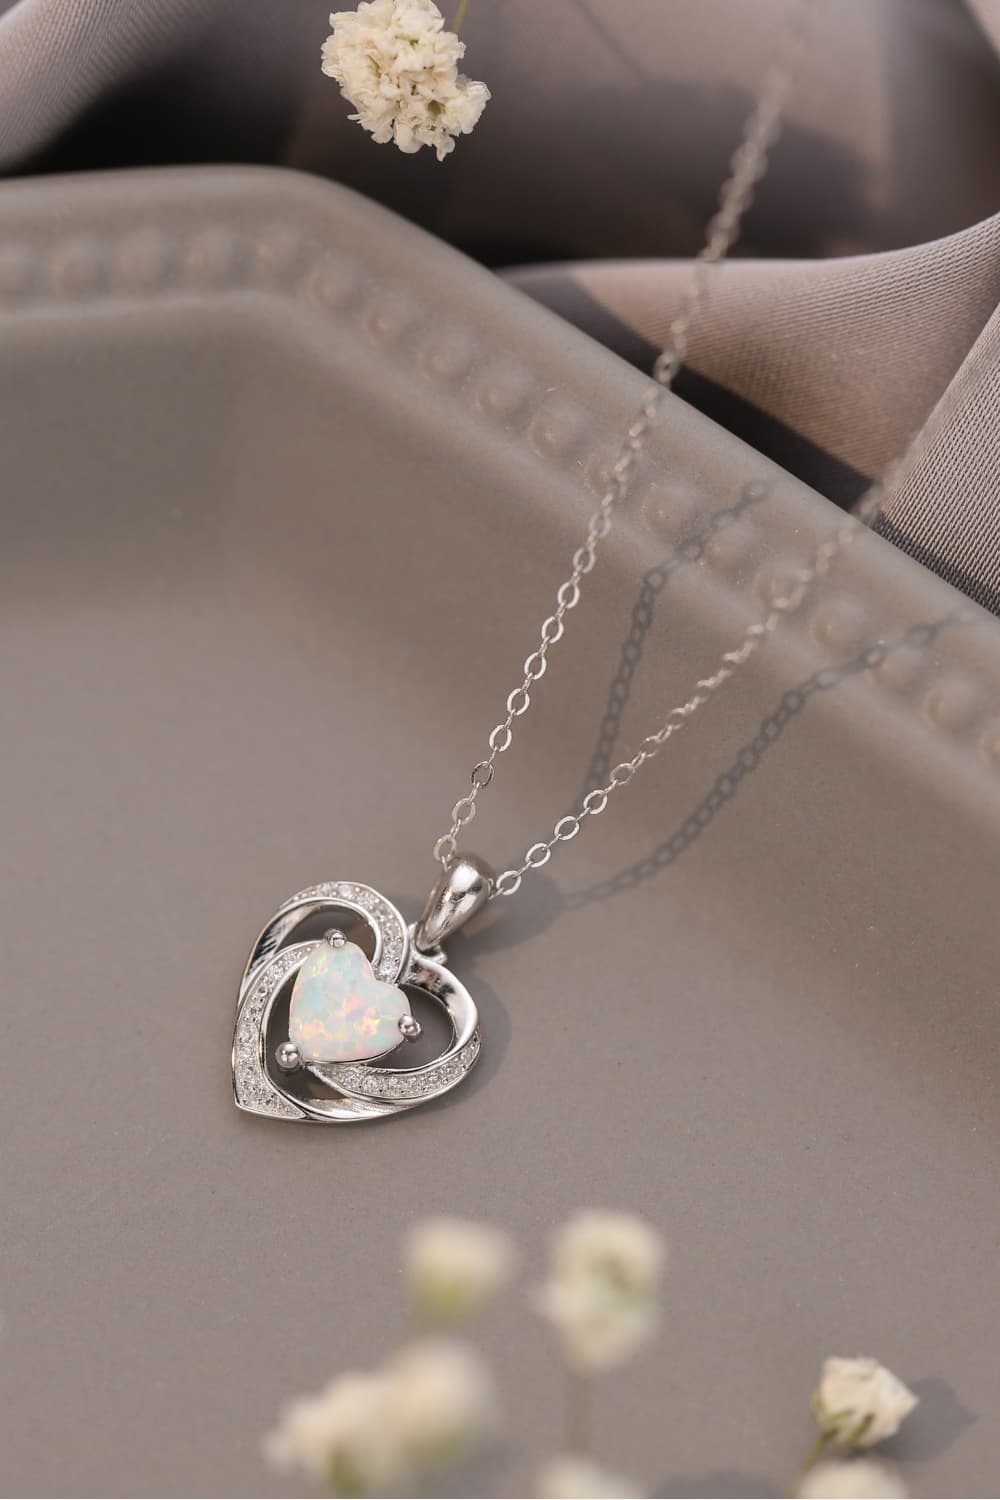 Opal Heart Pendant Necklace - bertofonsi